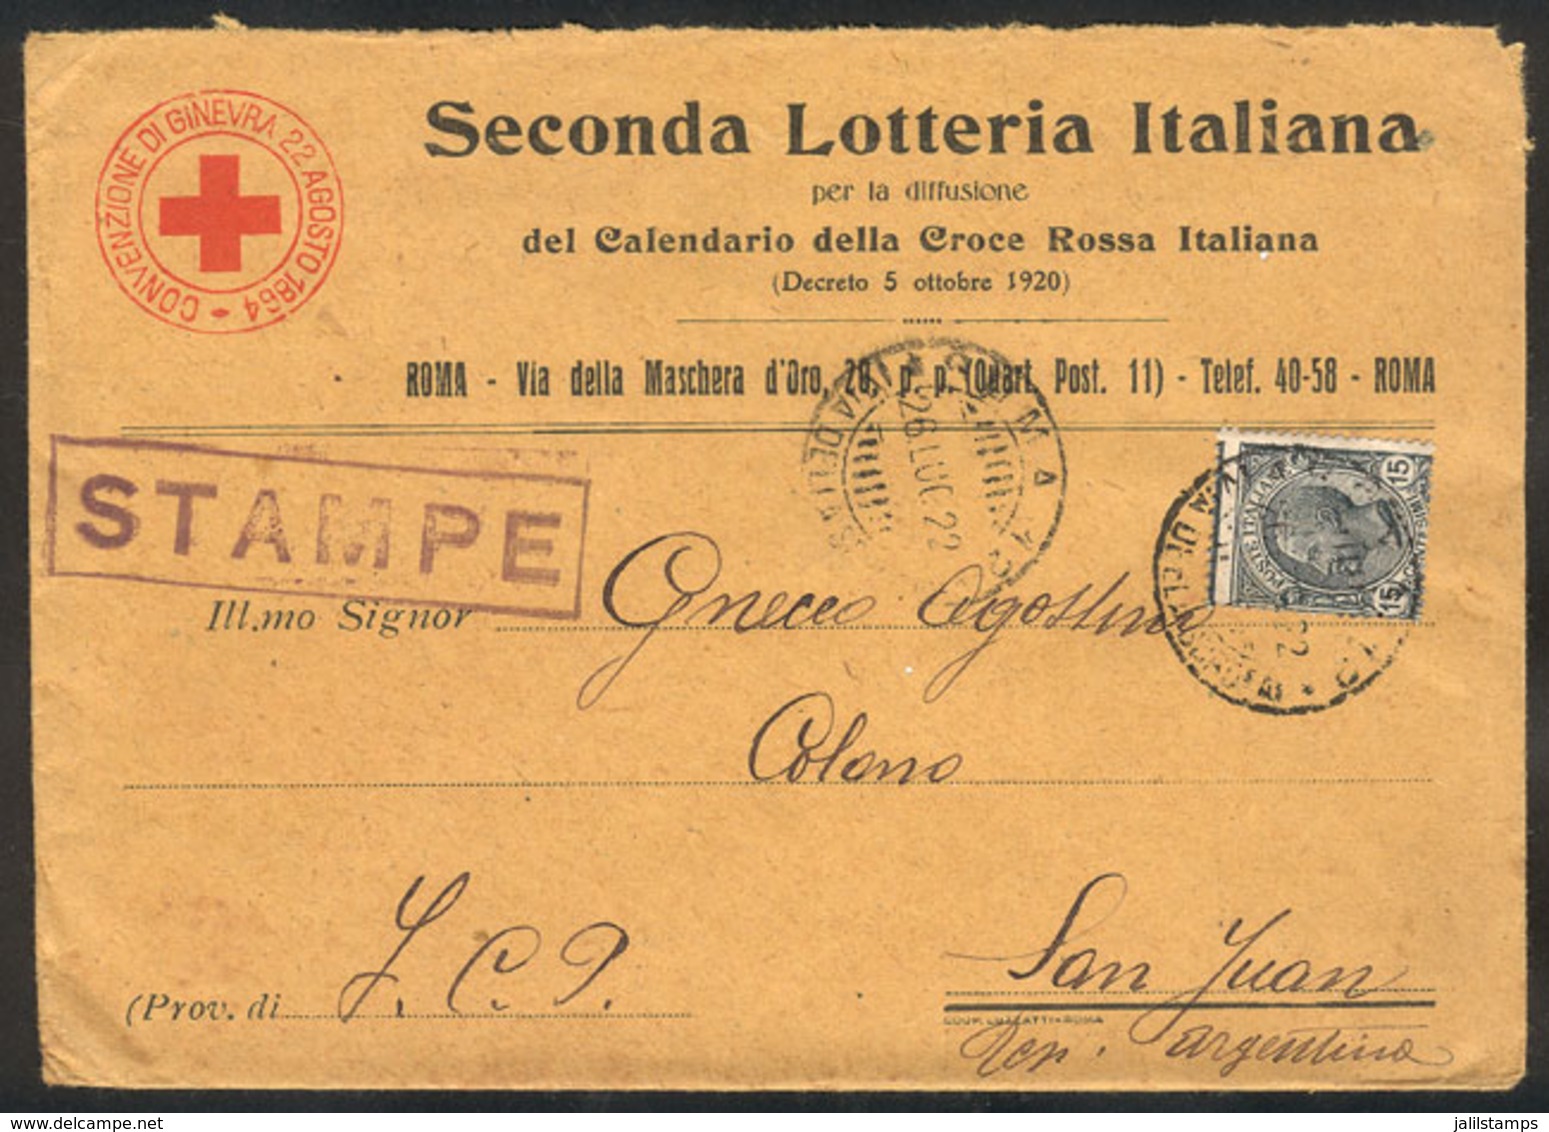 870 ITALY: Cover With Corner Card Of "Seconda Lotteria Italiana" Sent To Argentina On - Non Classés